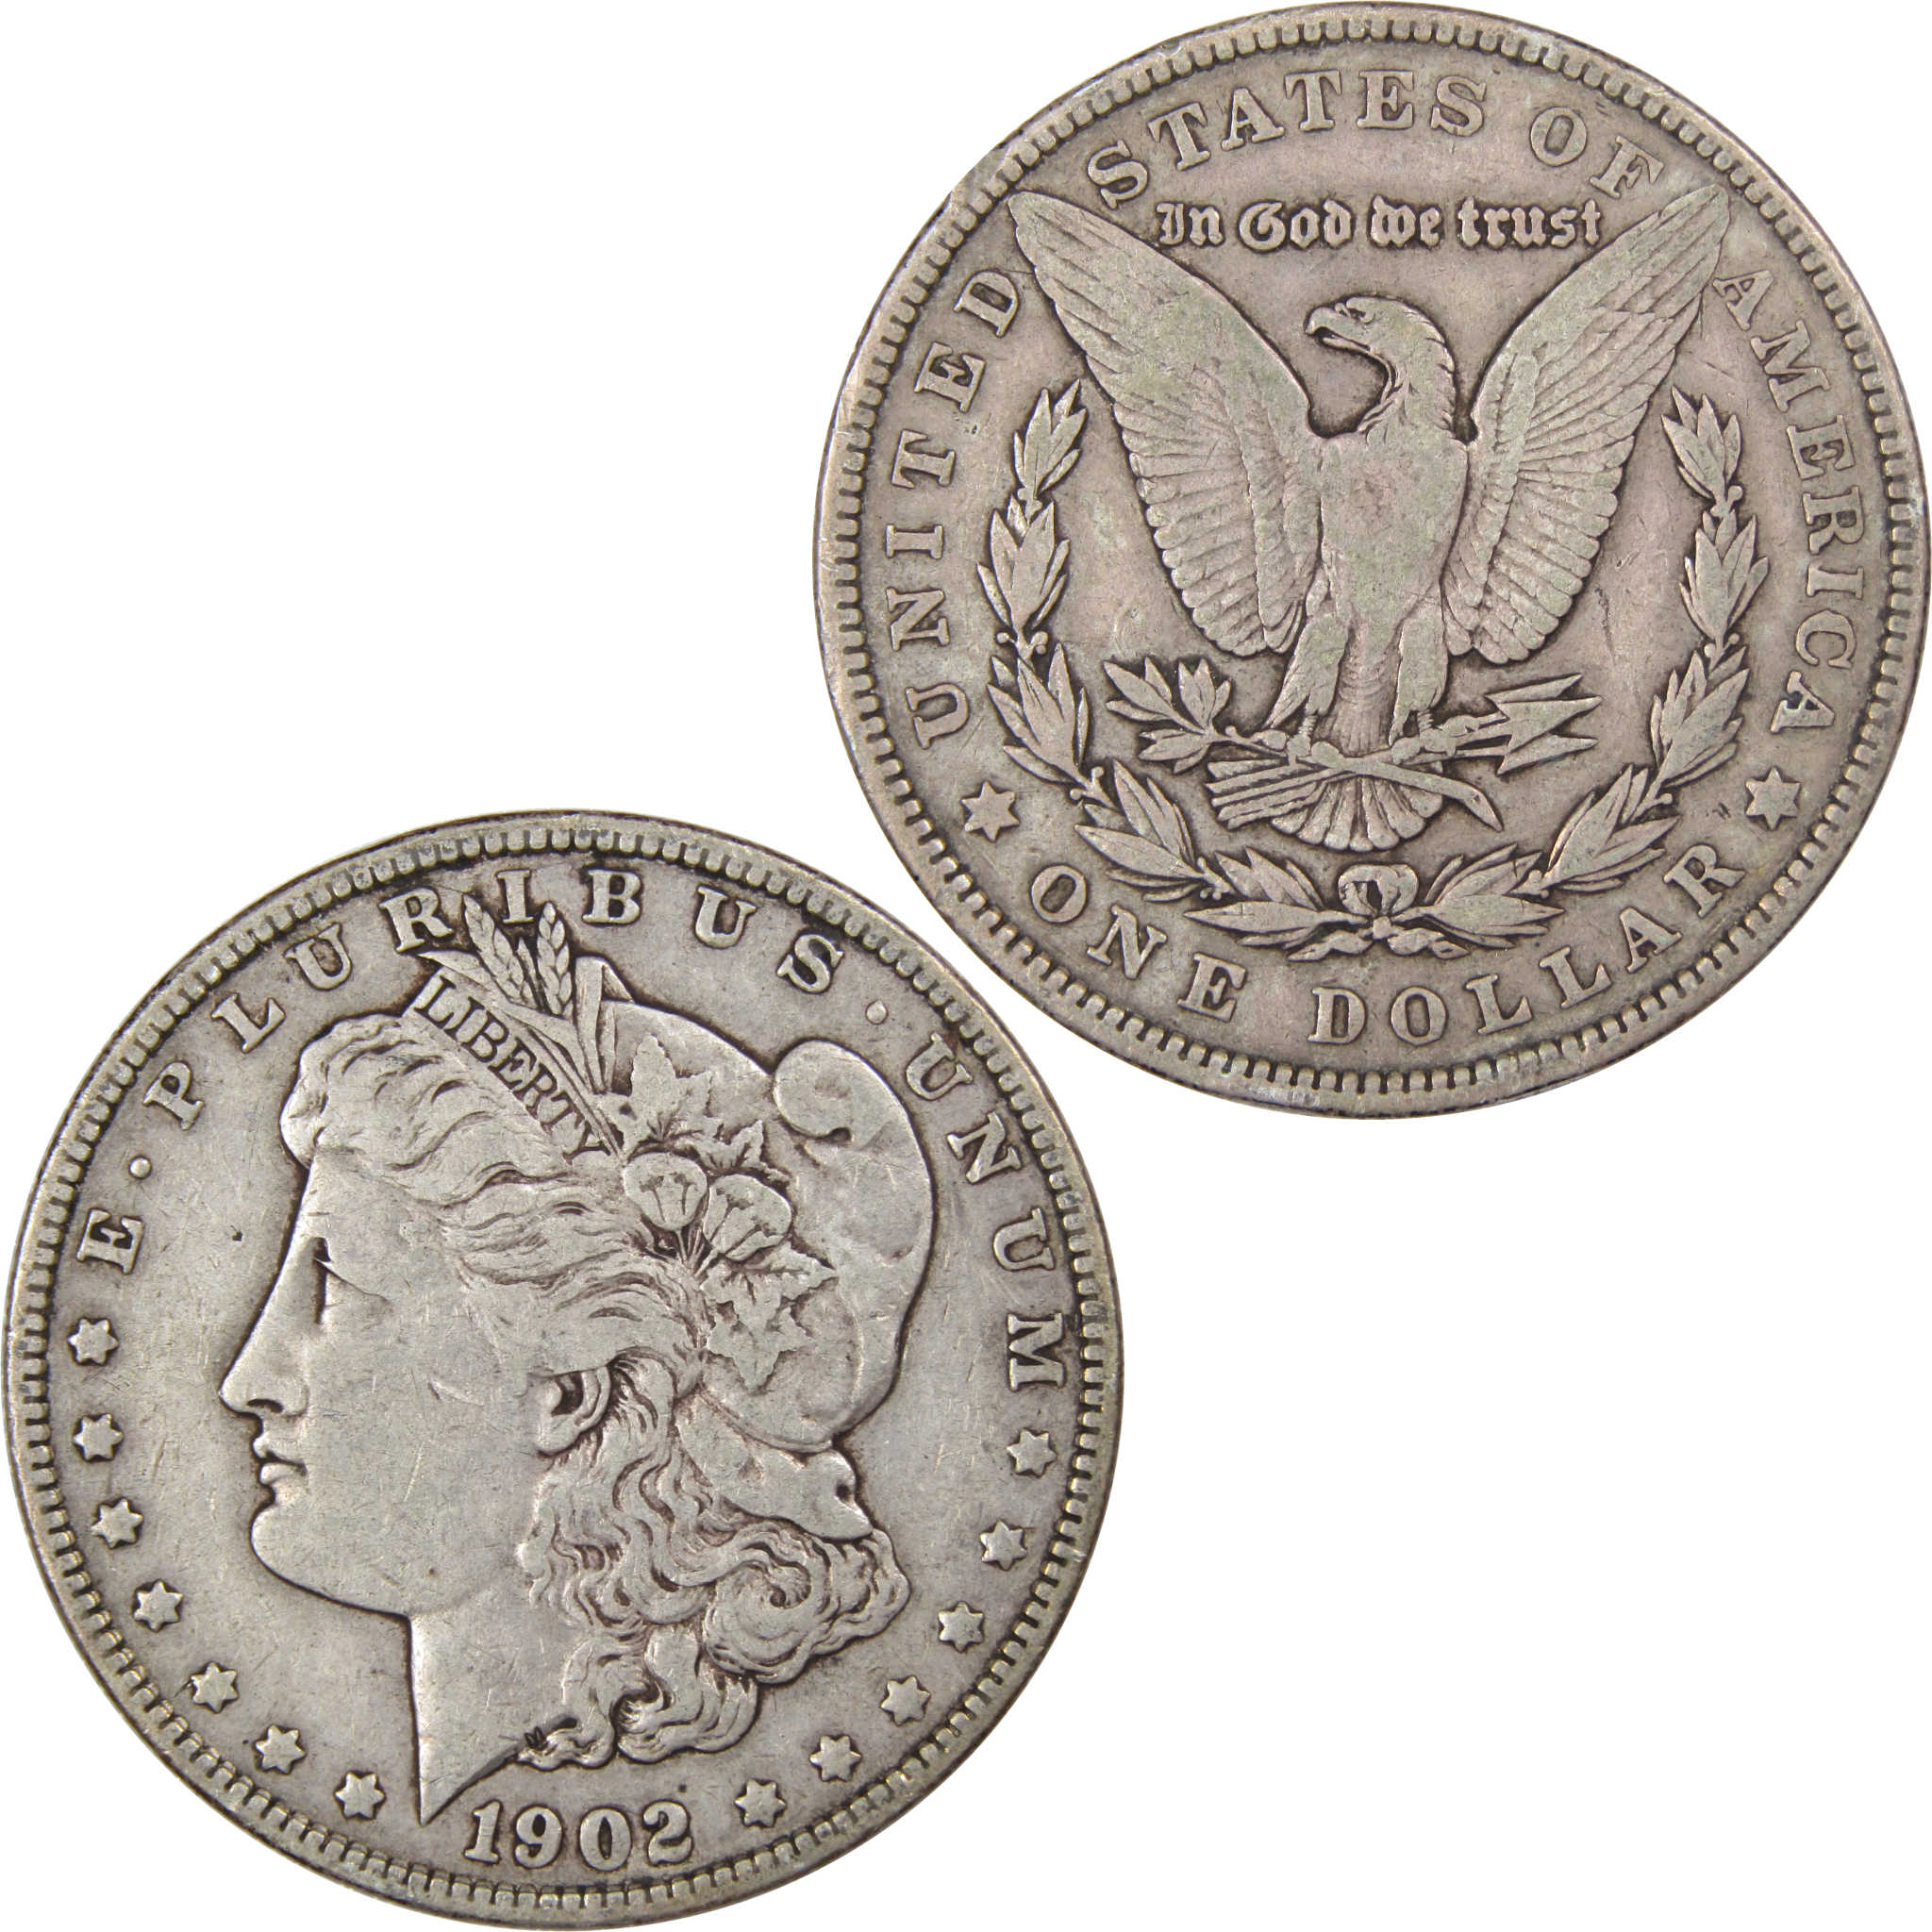 1902 Morgan Dollar F Fine 90% Silver $1 US Coin Collectible SKU:I1862 - Morgan coin - Morgan silver dollar - Morgan silver dollar for sale - Profile Coins &amp; Collectibles